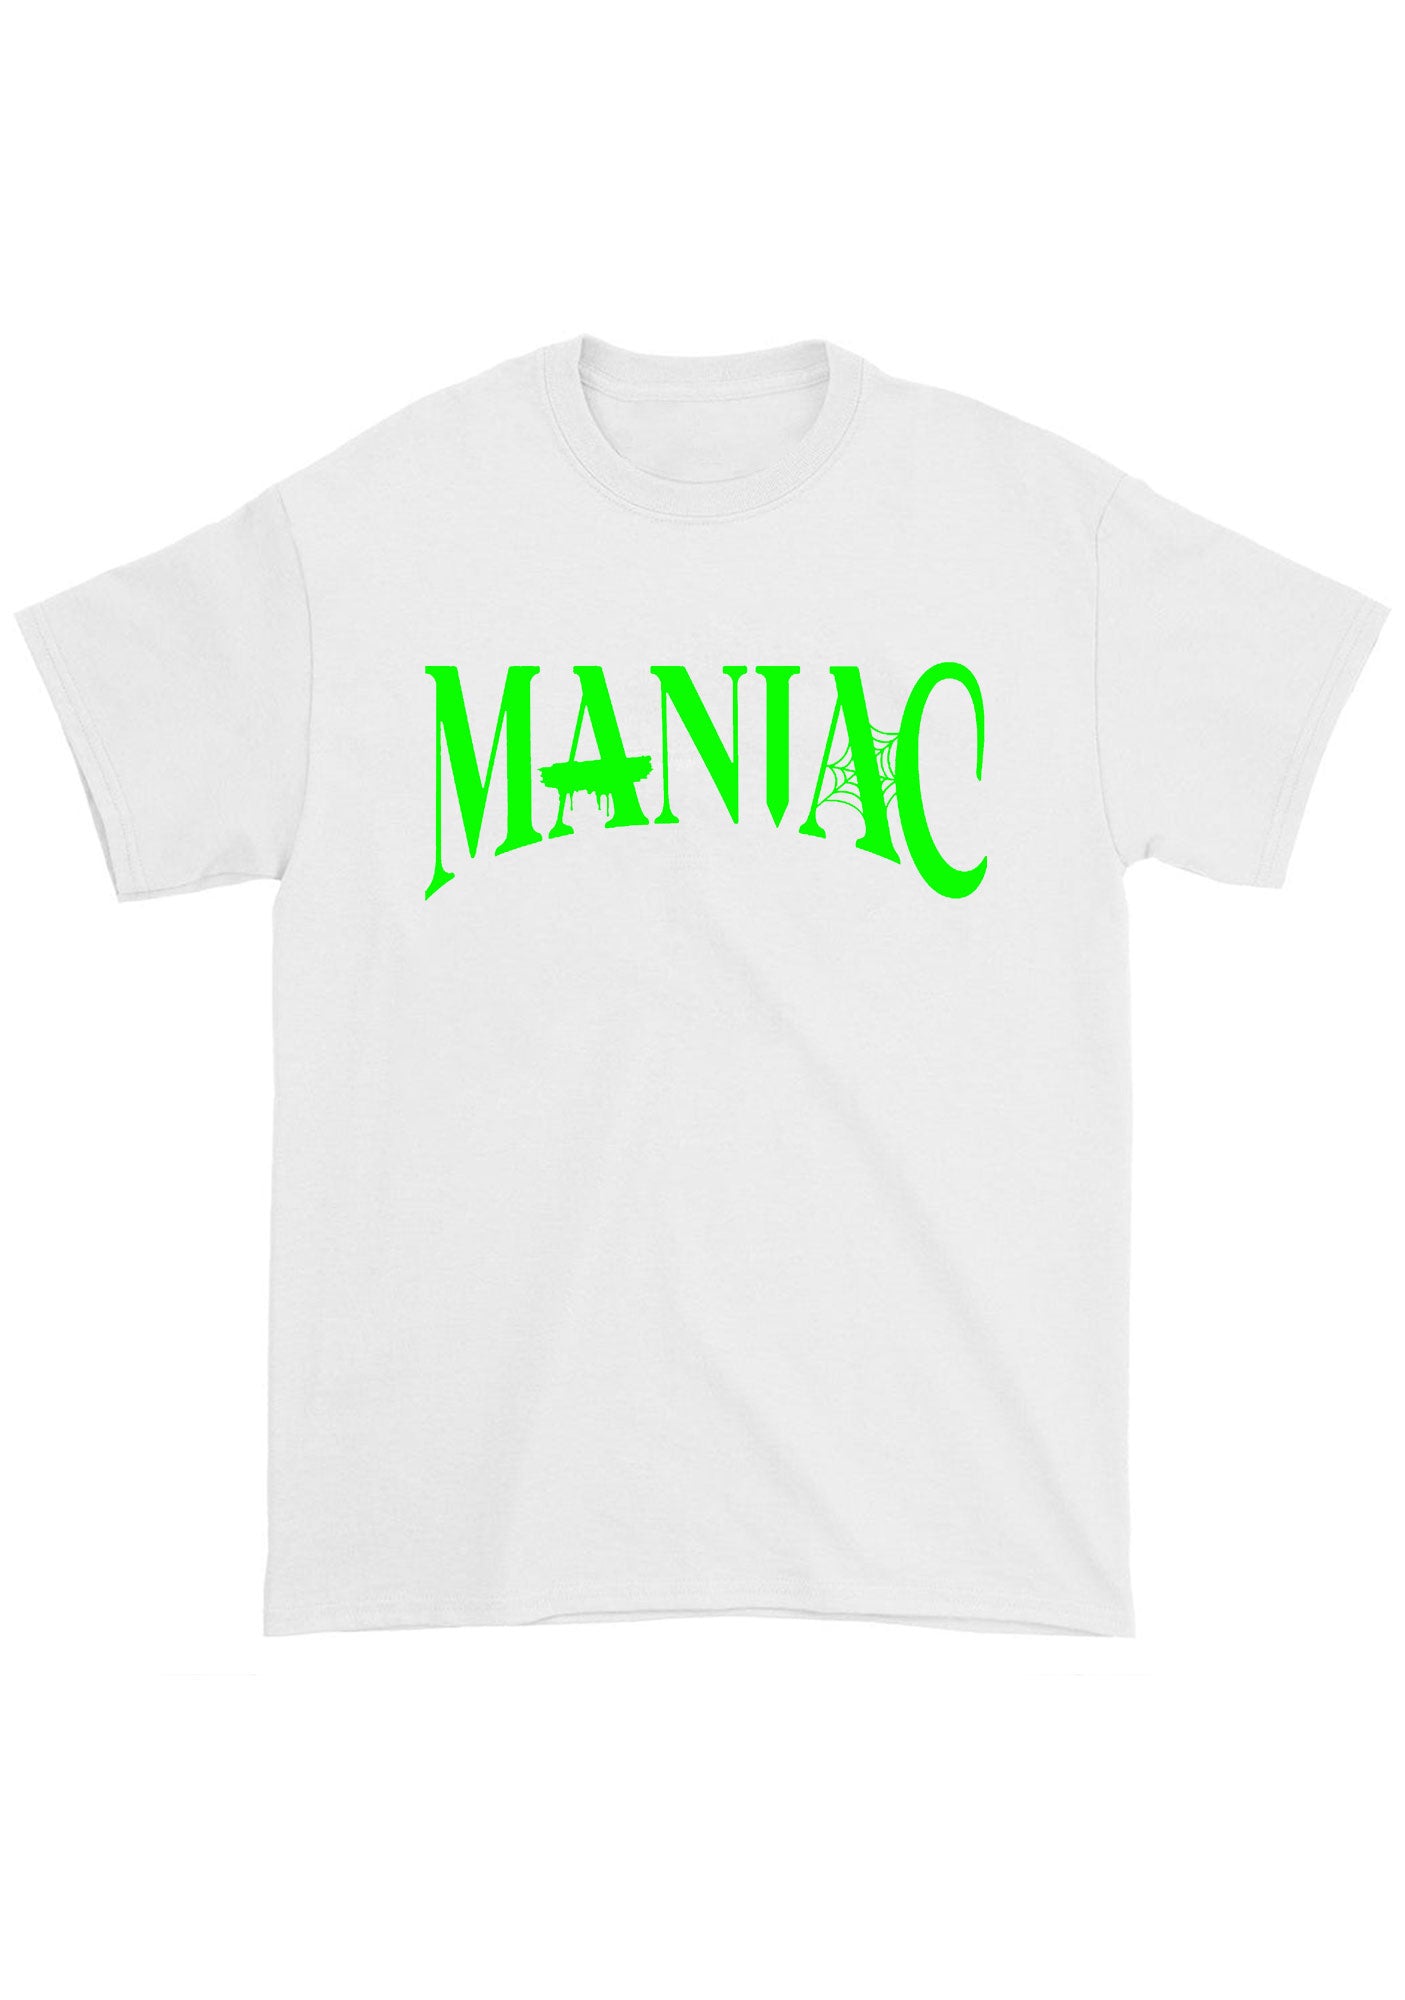 Maniac Spider Skz Kpop Chunky Shirt